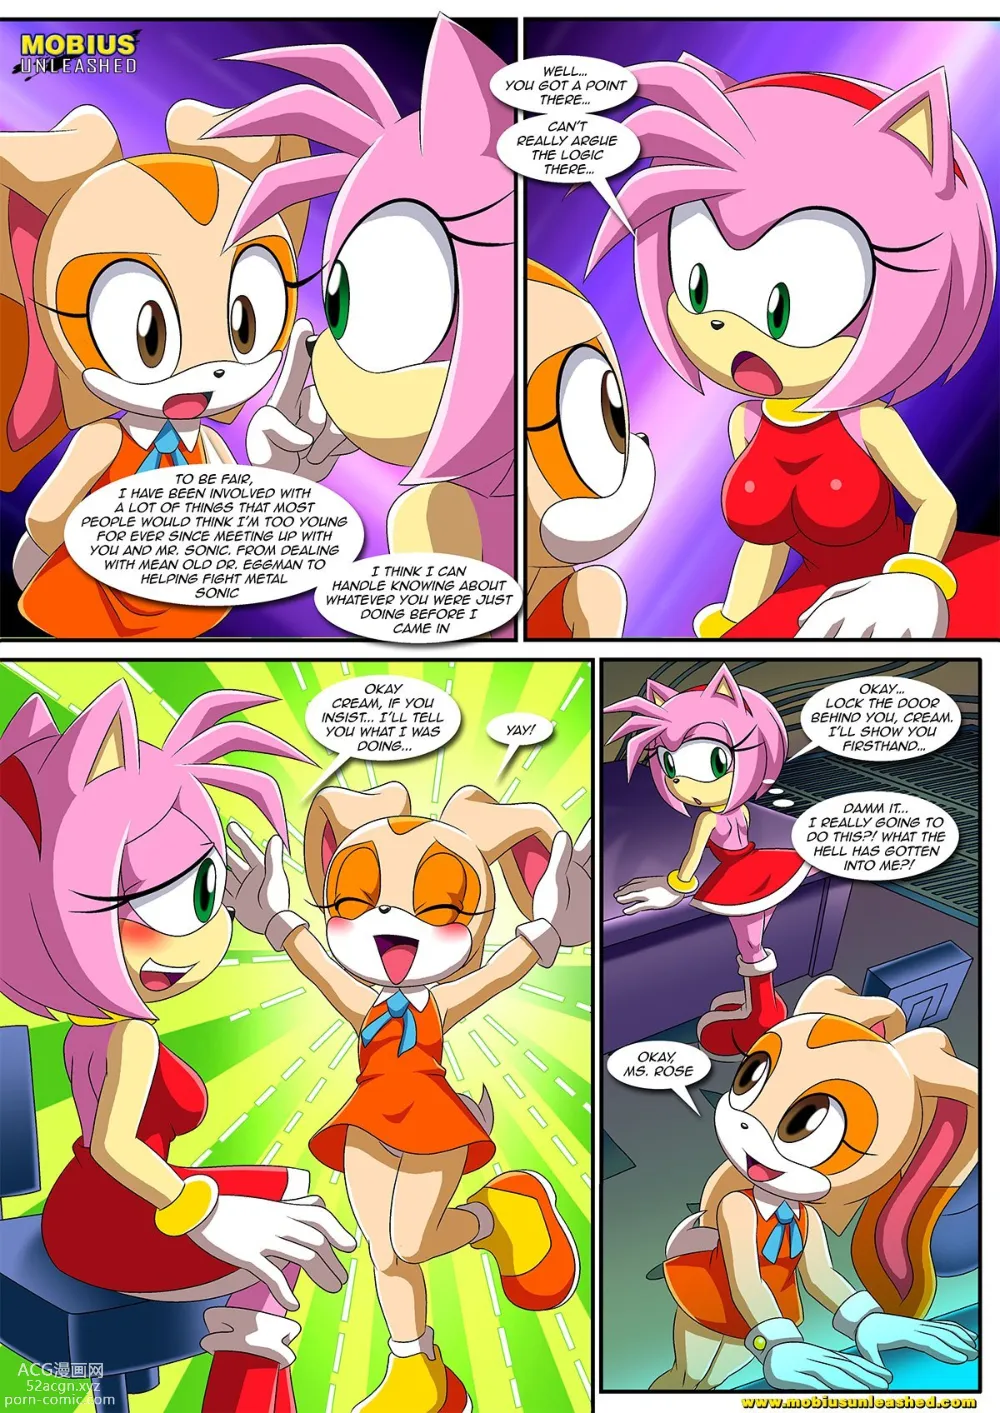 The Mayhem of the Kinky Virus - Chapter 2 (Sonic the Hedgehog ...